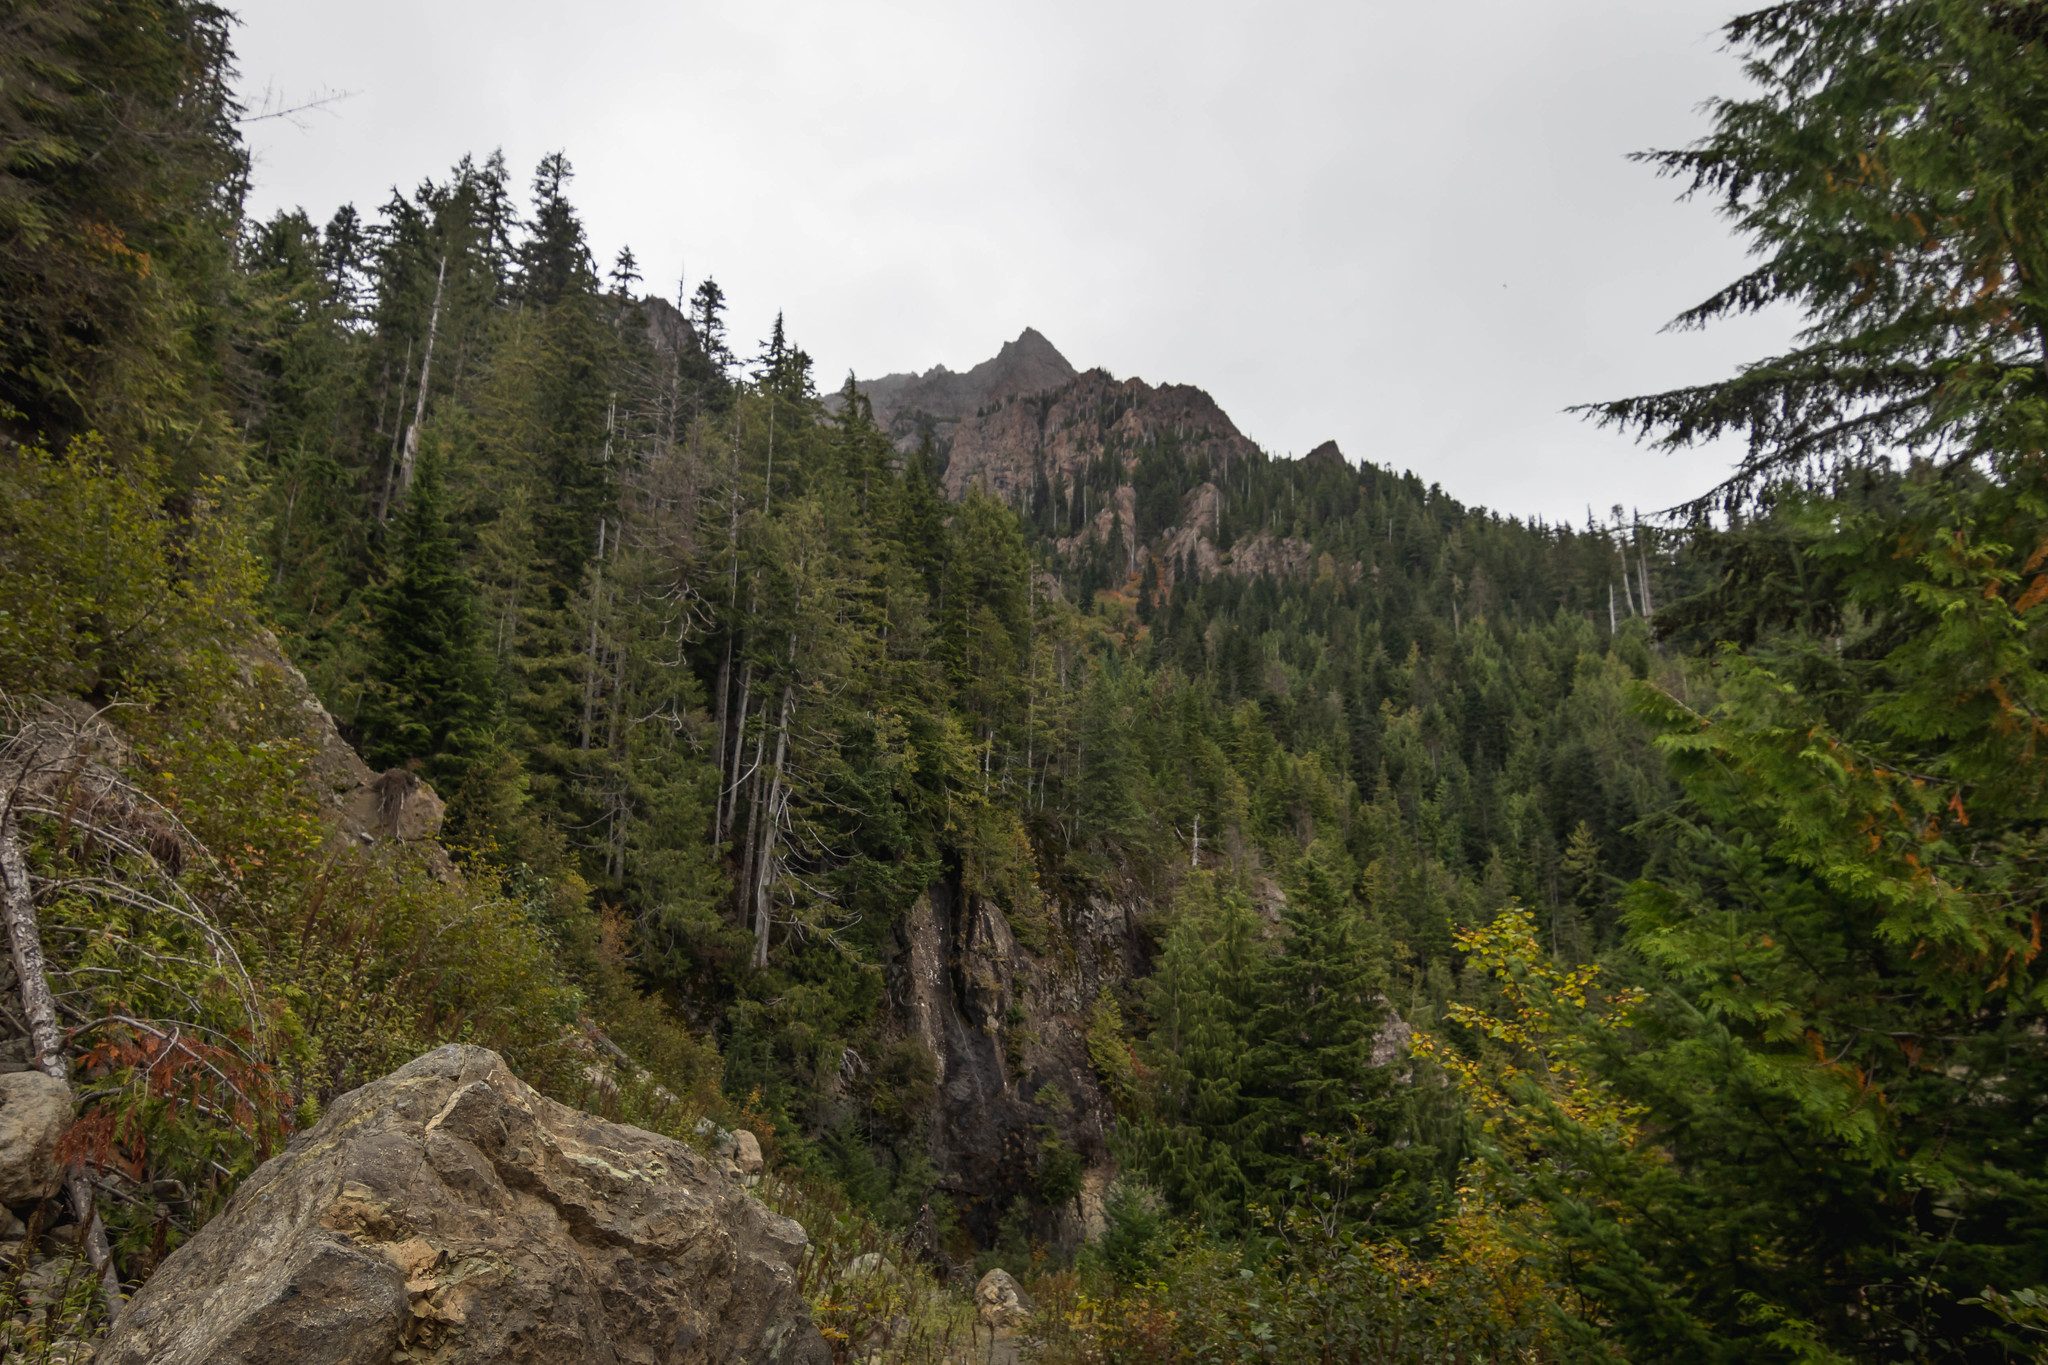 Mount Washington from the trailhead